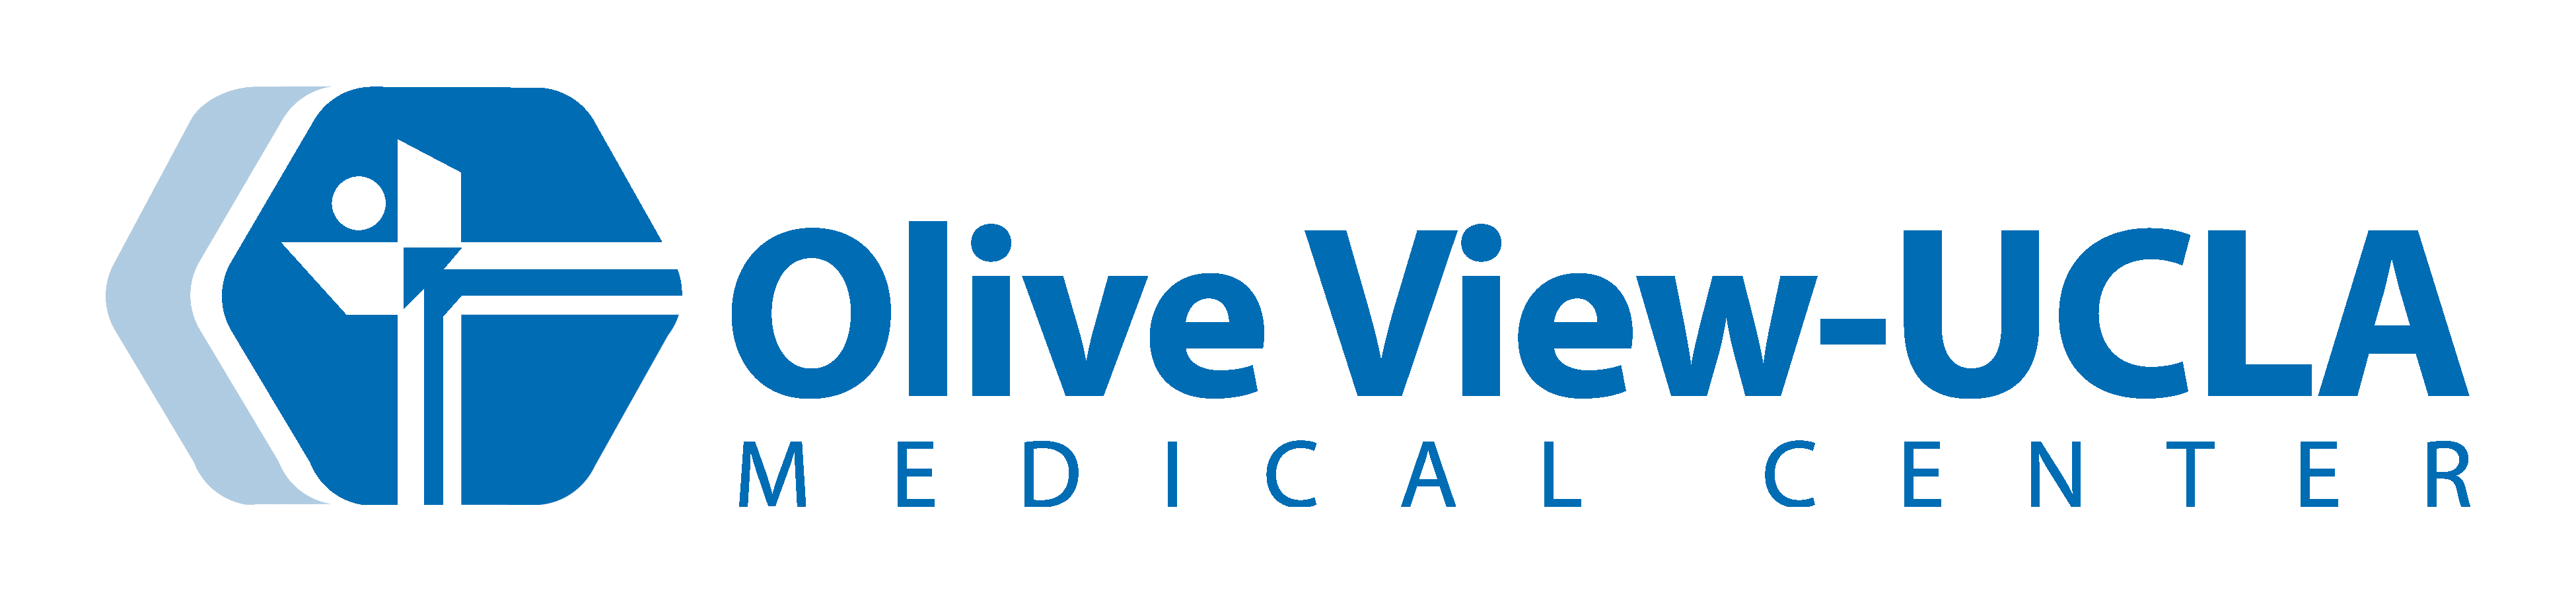 Olive View – UCLA Medical Center